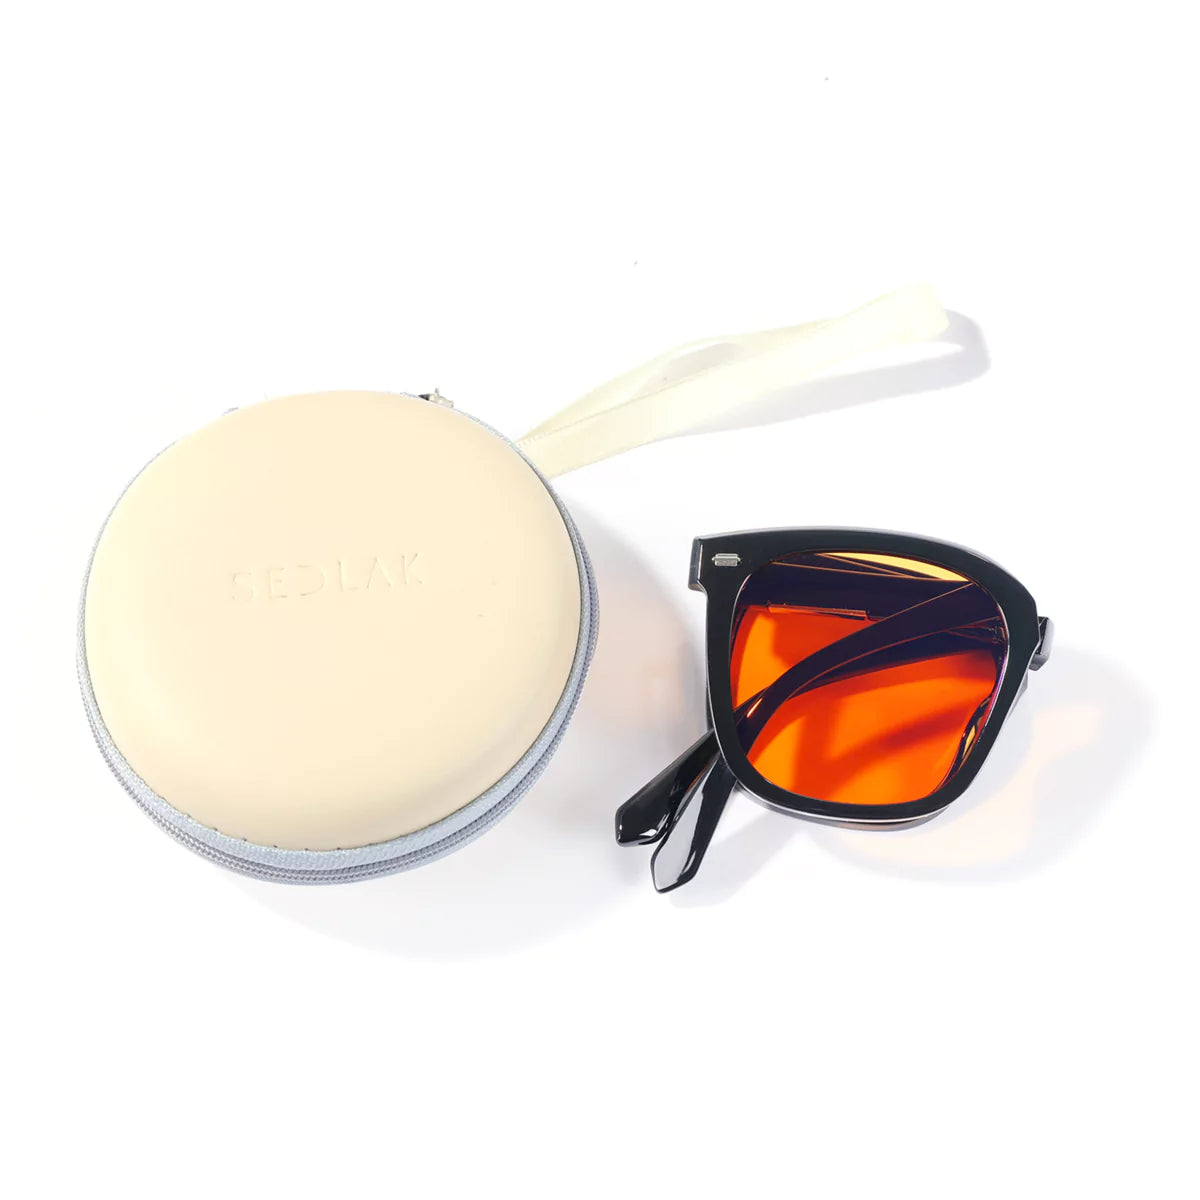 Sunglasses with orange lenses next to a round case.